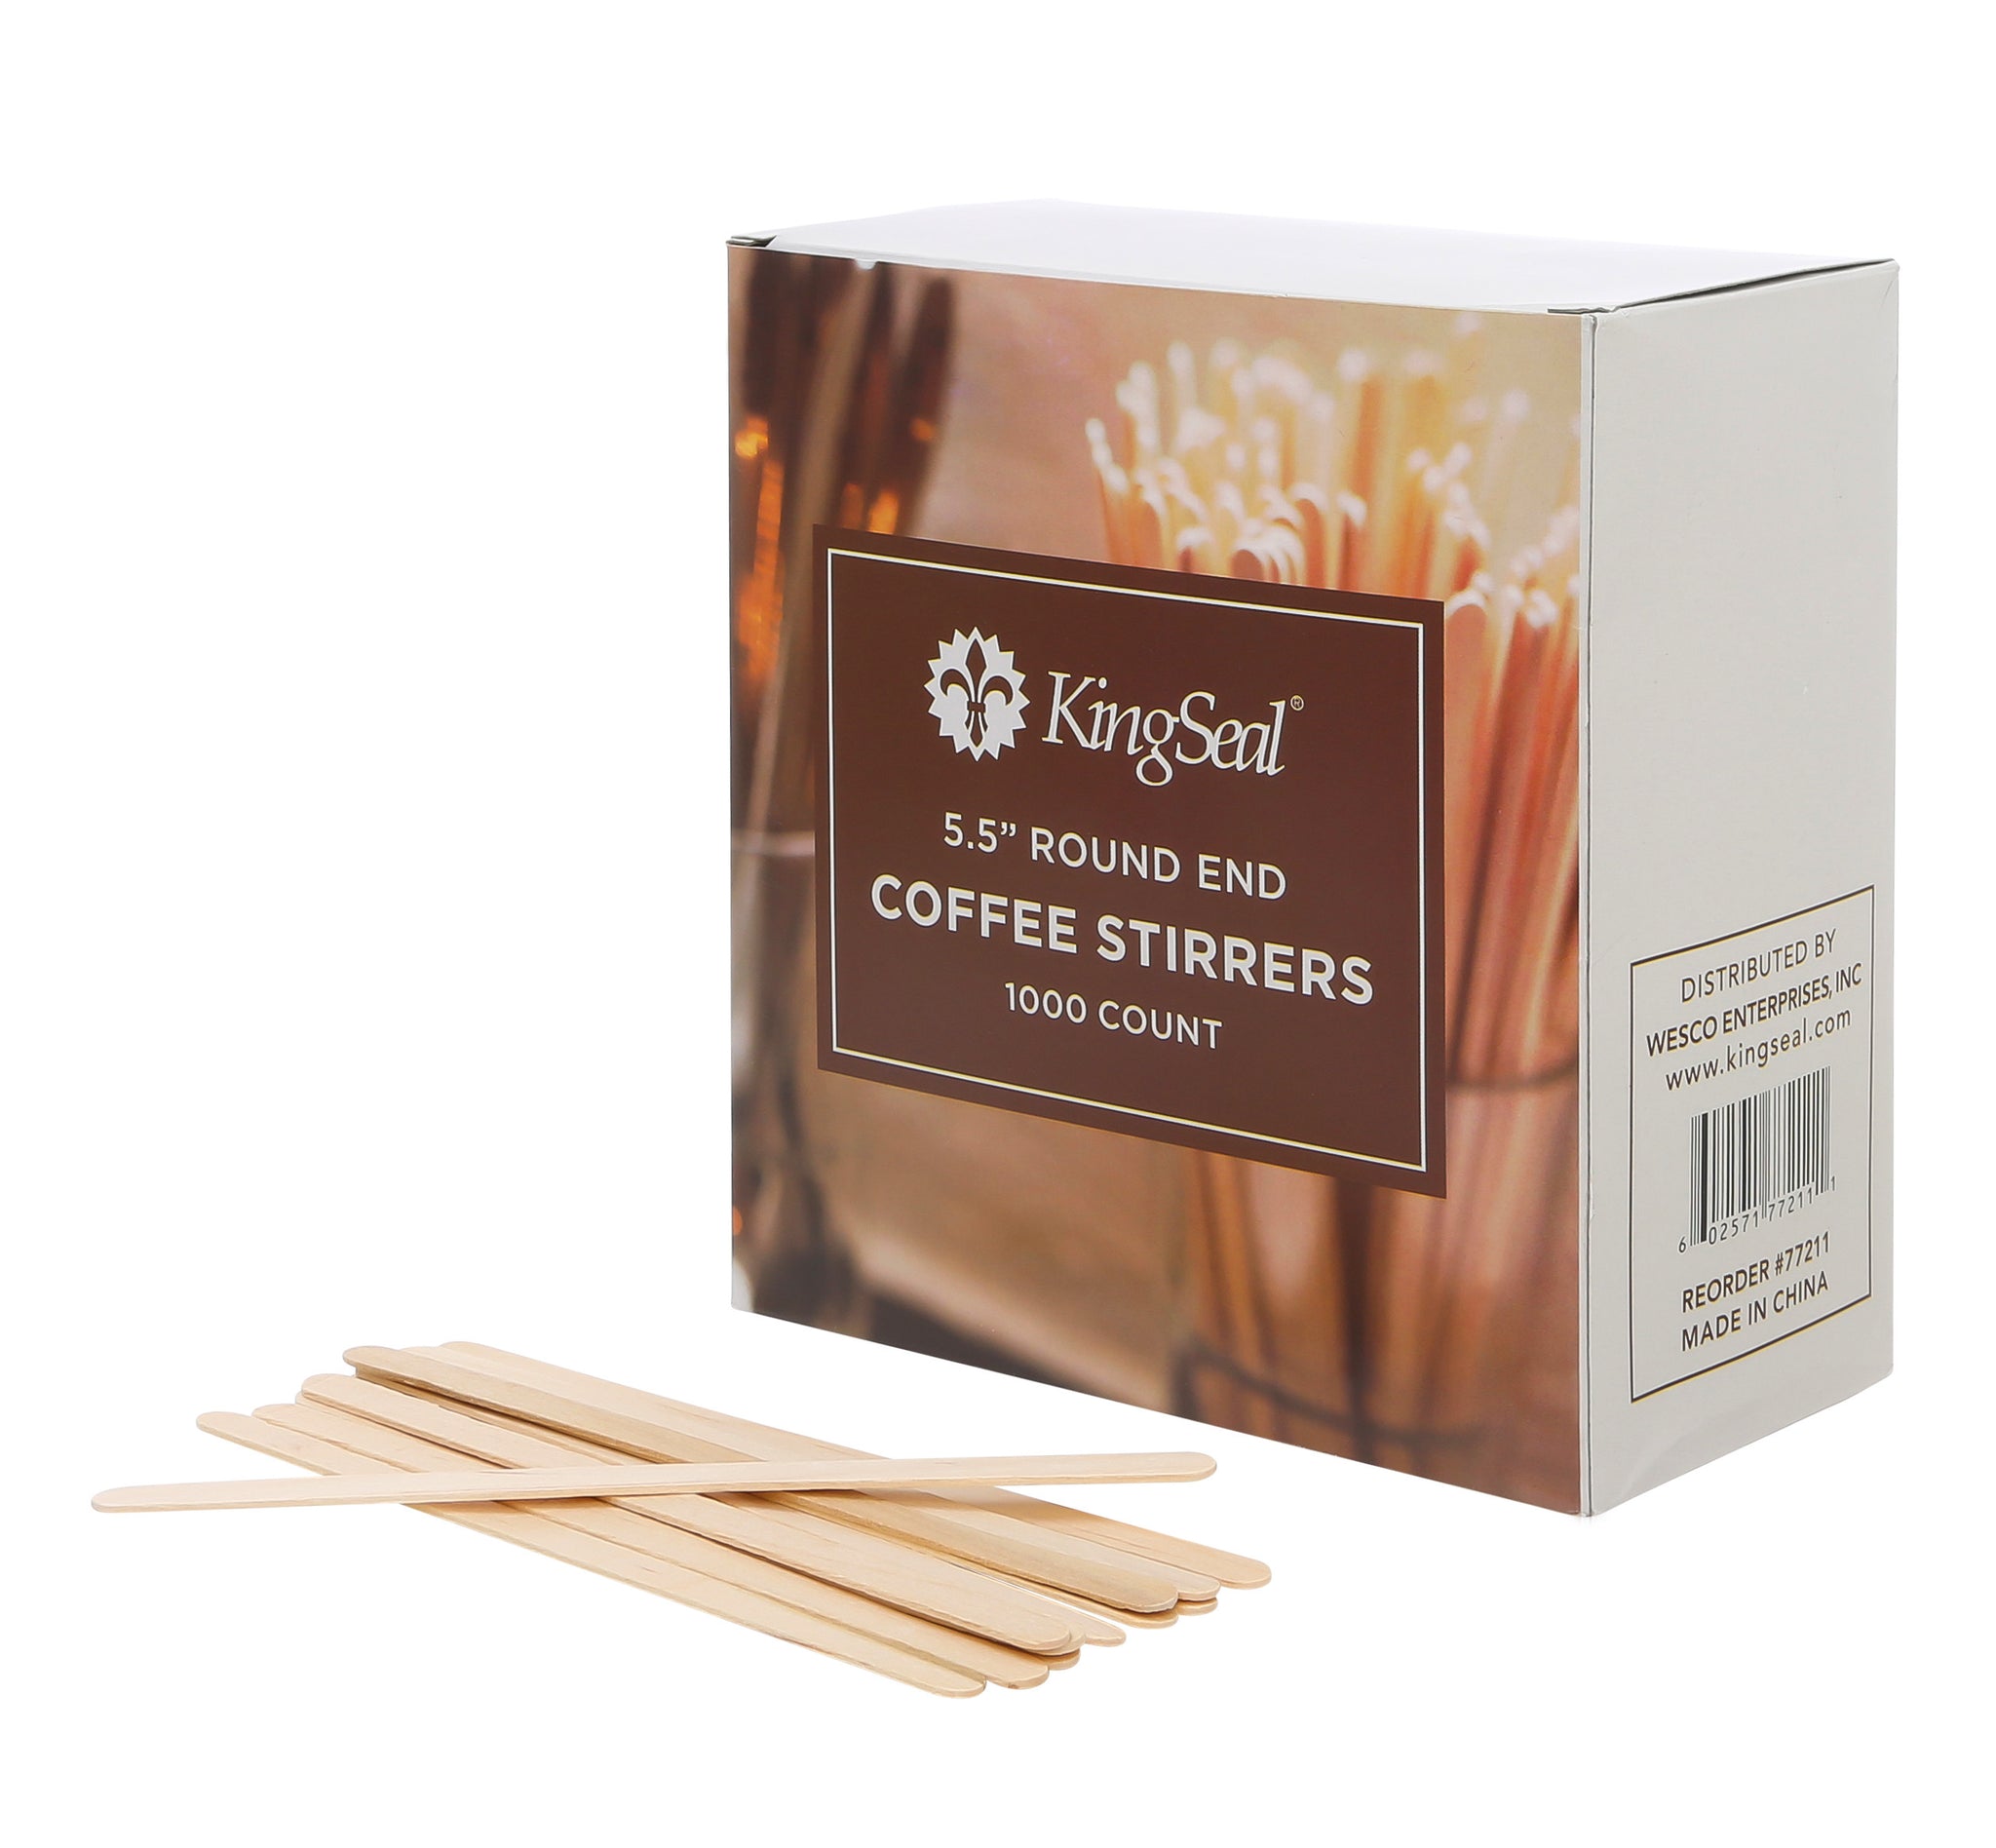 KingSeal FSC® C041262 Certified Birch Wood Coffee Stirrers, Stir Sticks,  Round End - 7.5 Inch